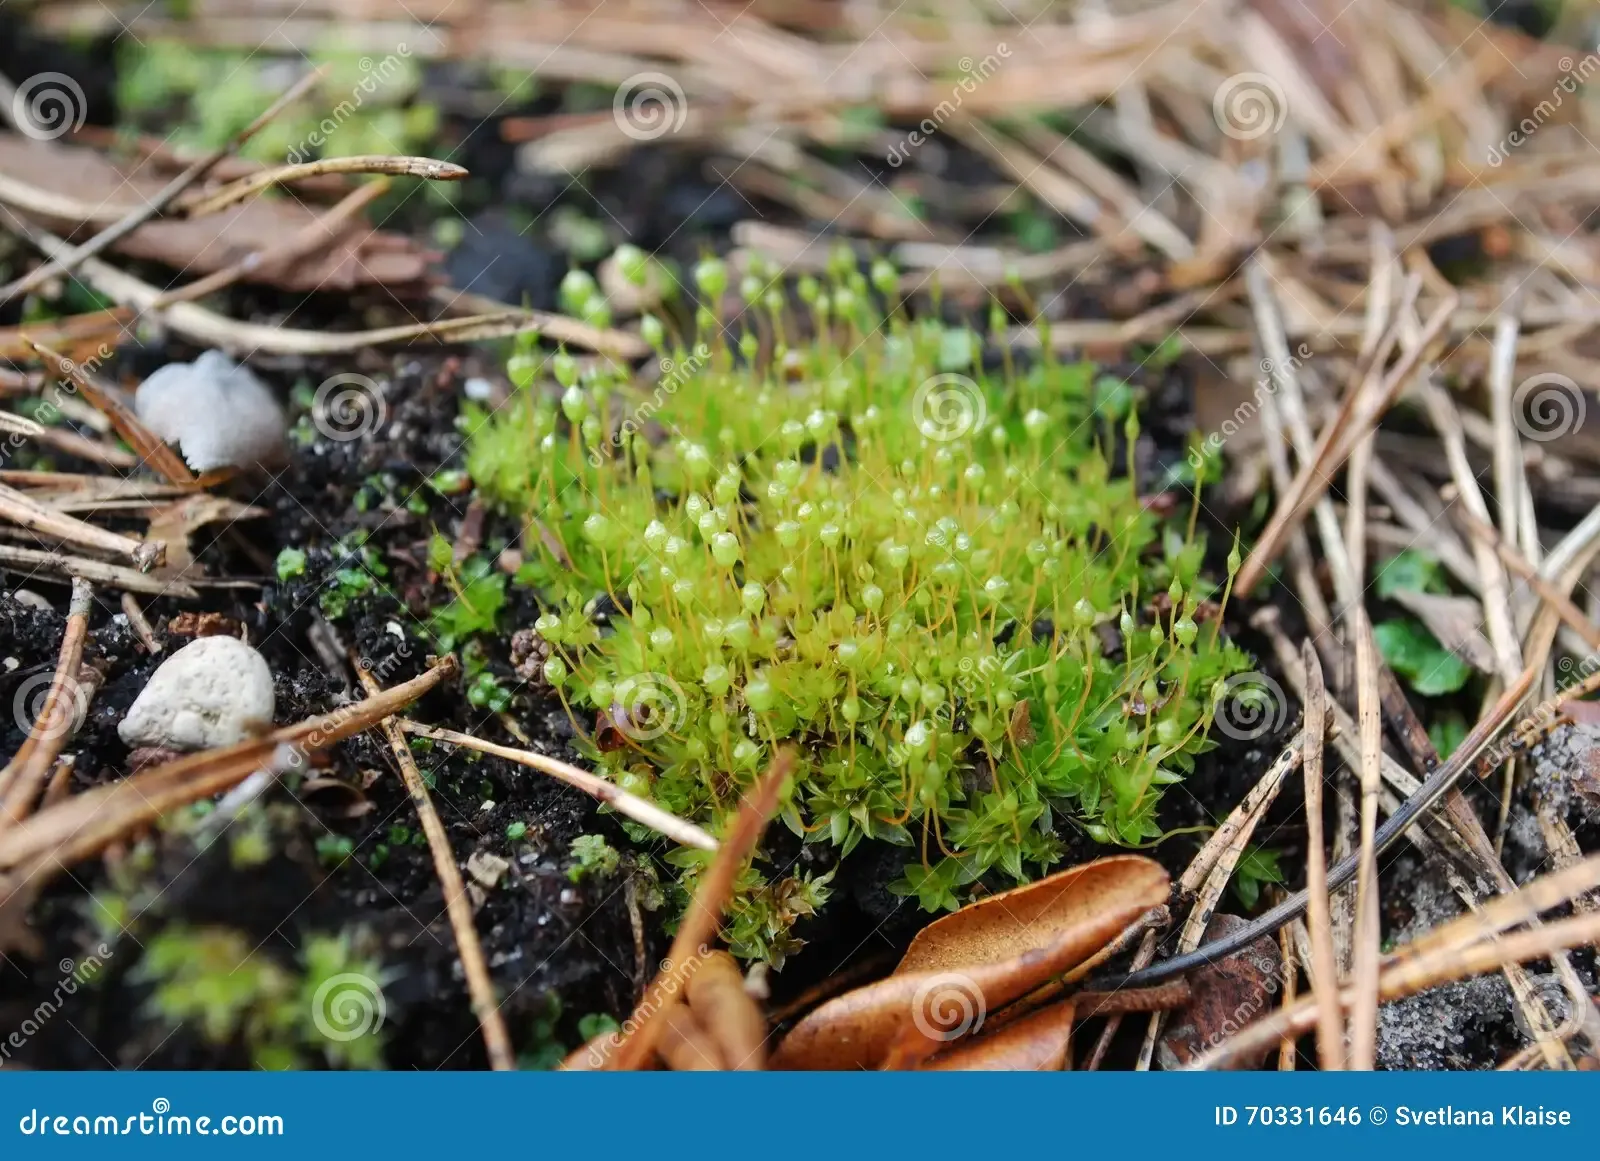 bartramia-pomiformis-common-apple-moss-species-bartramiaceae-family-typically-green-glaucous-70331646.jpg